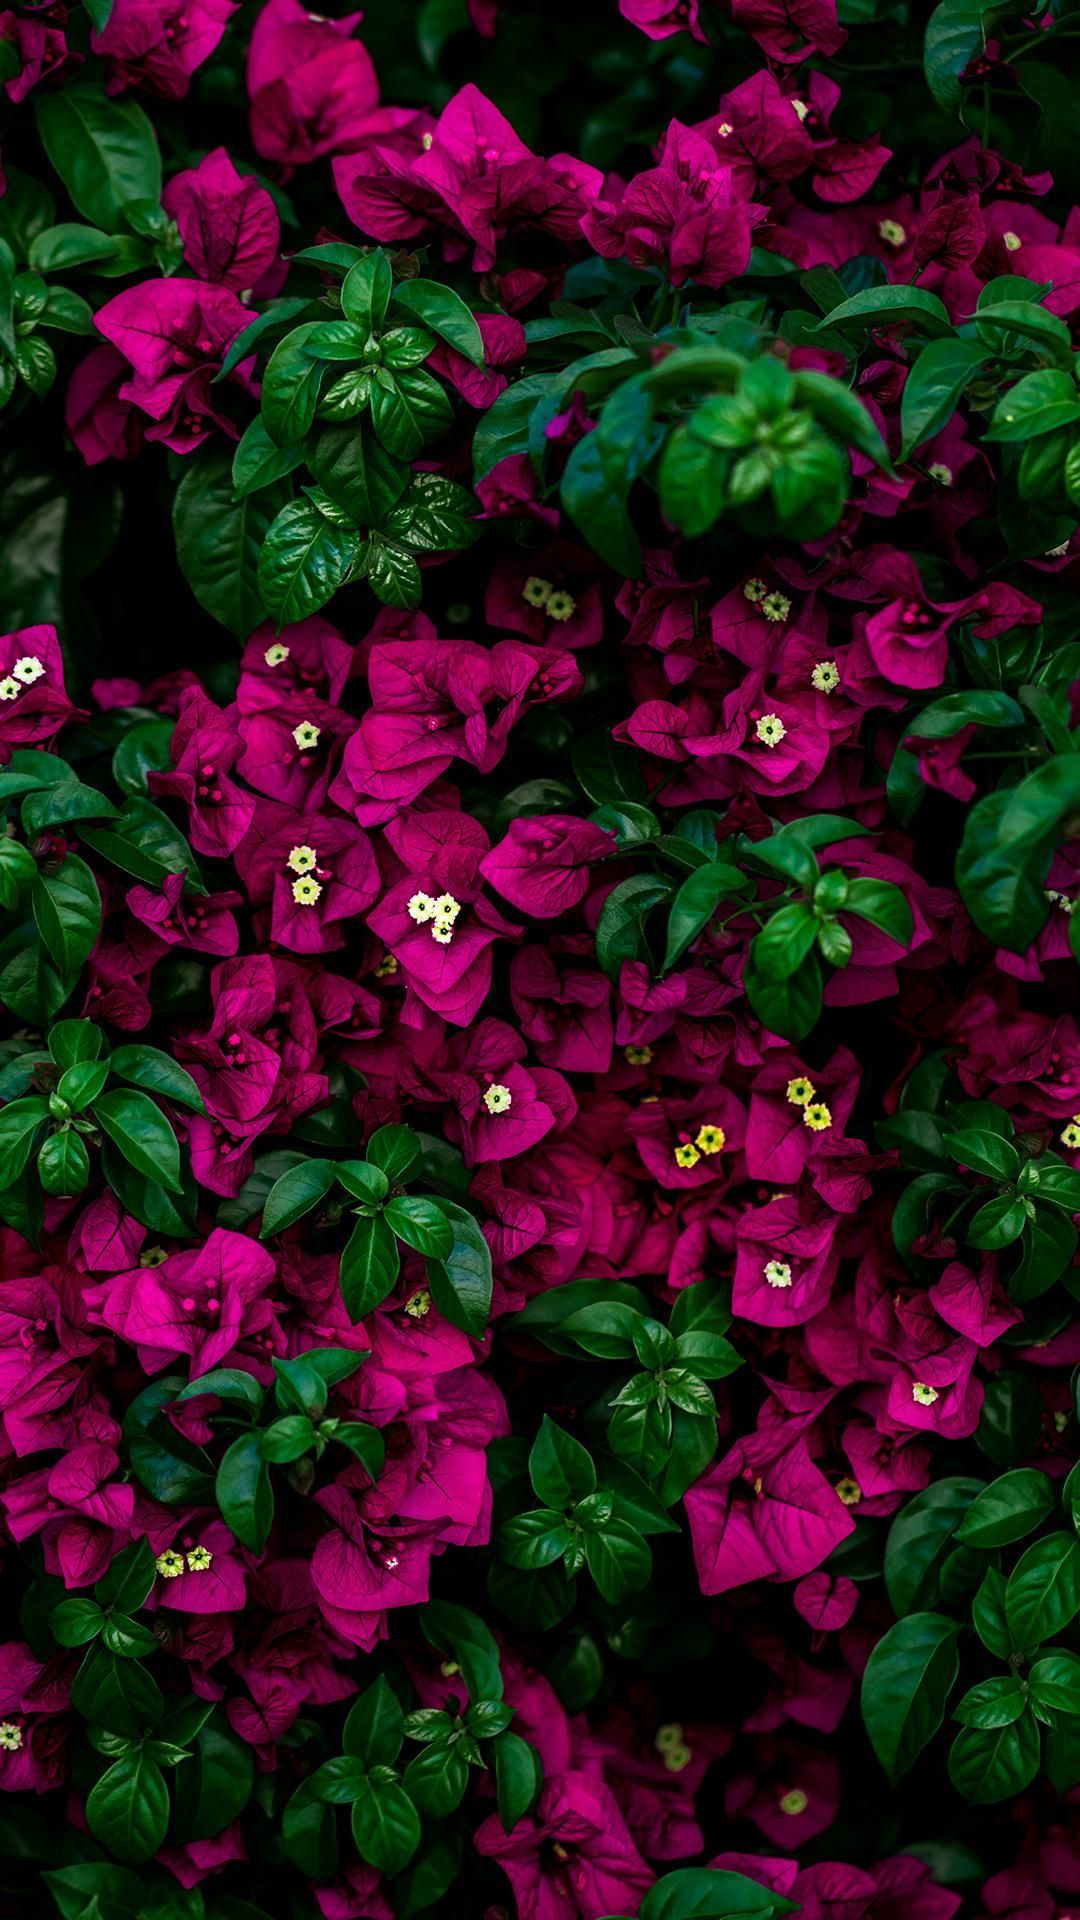 Amoled Wallpaper 38. Flower wallpaper, Nature iphone wallpaper